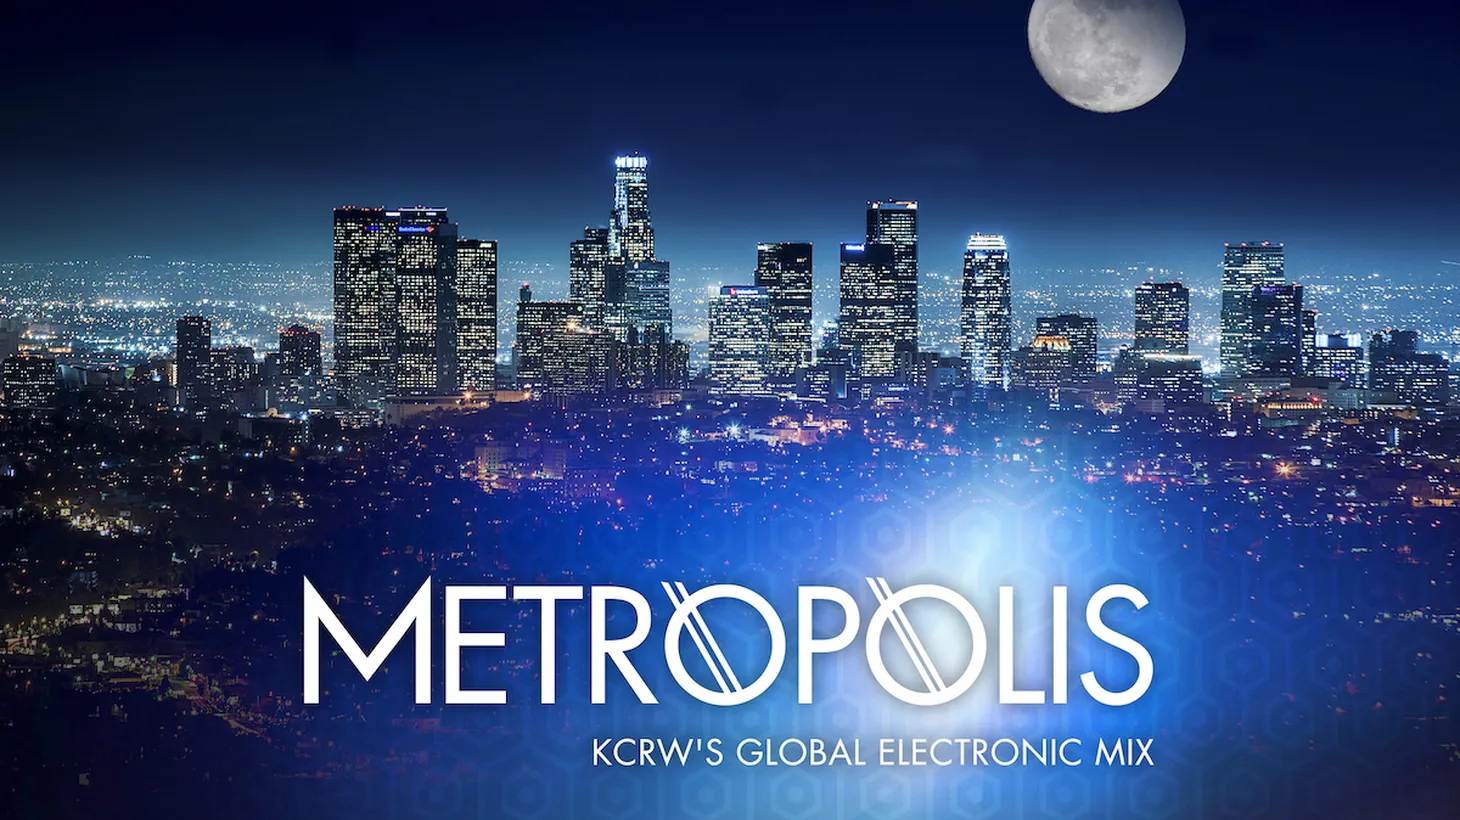 Metropolis playlist January 21, 2023.